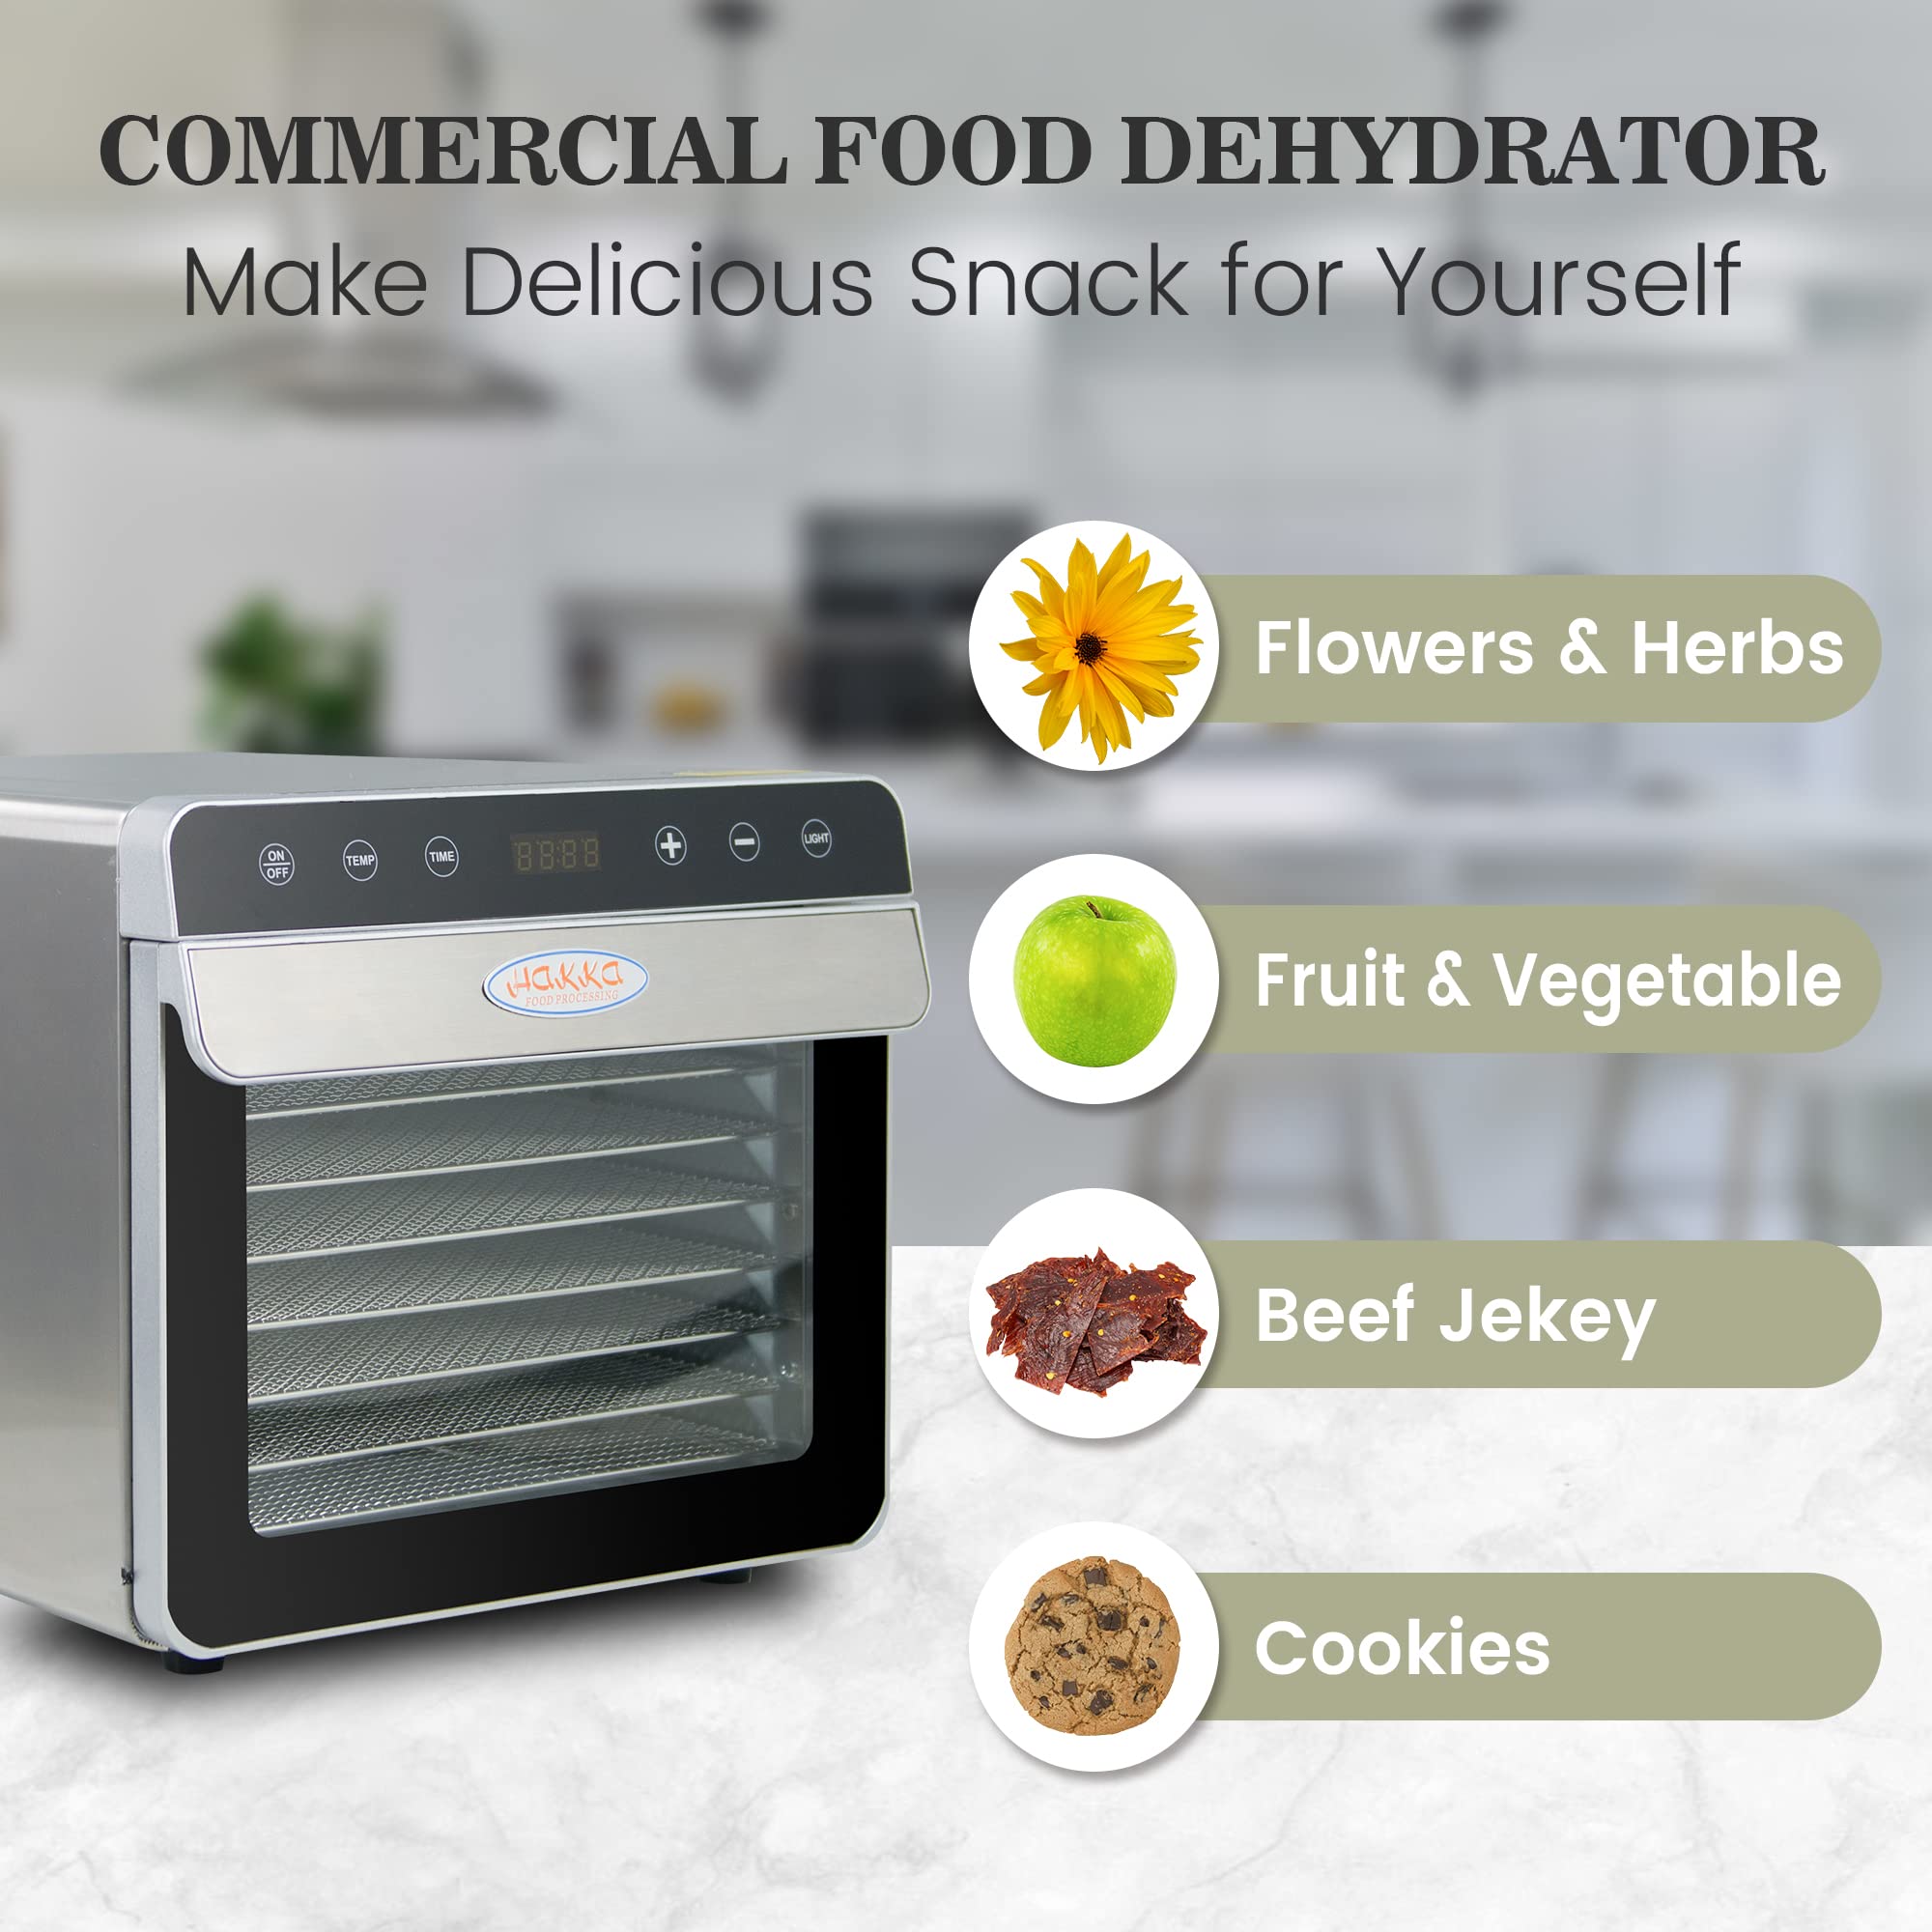 Hakka Food Dehydrator, 8 trays Food Dehydrator Machine for Jerky/Vegetables/Fruits/Meat/Dog Treats/Herbs, Stainless Steel, 700W